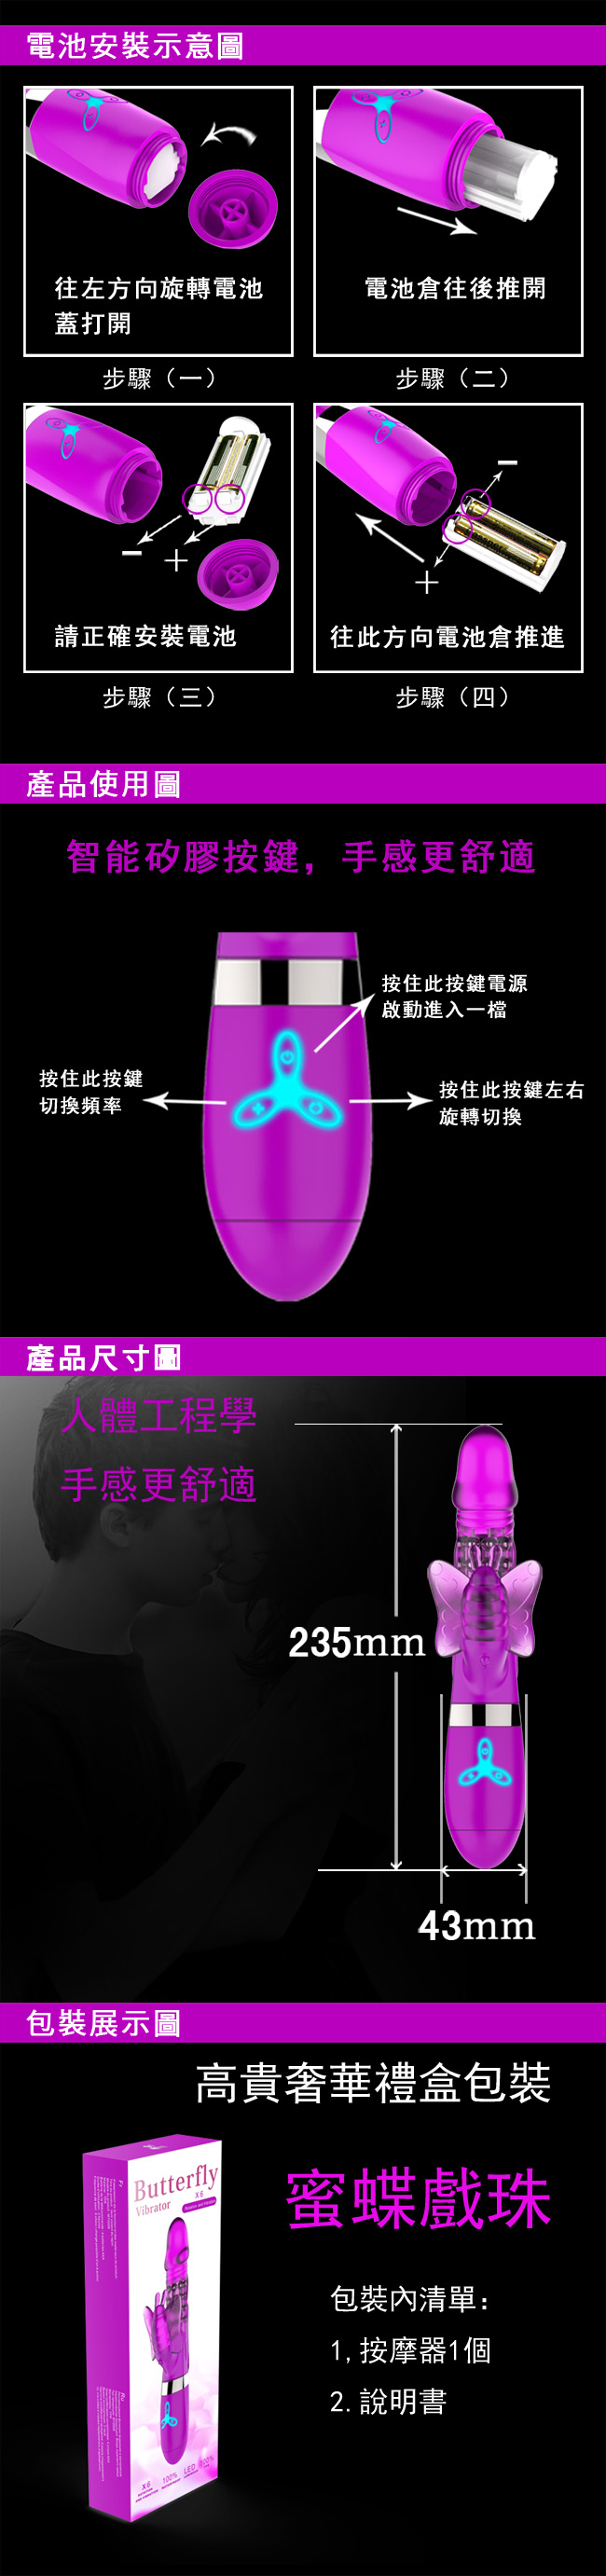 Dibe-蜜蝶戲珠 6×6變頻防水按摩棒(紫)(特)